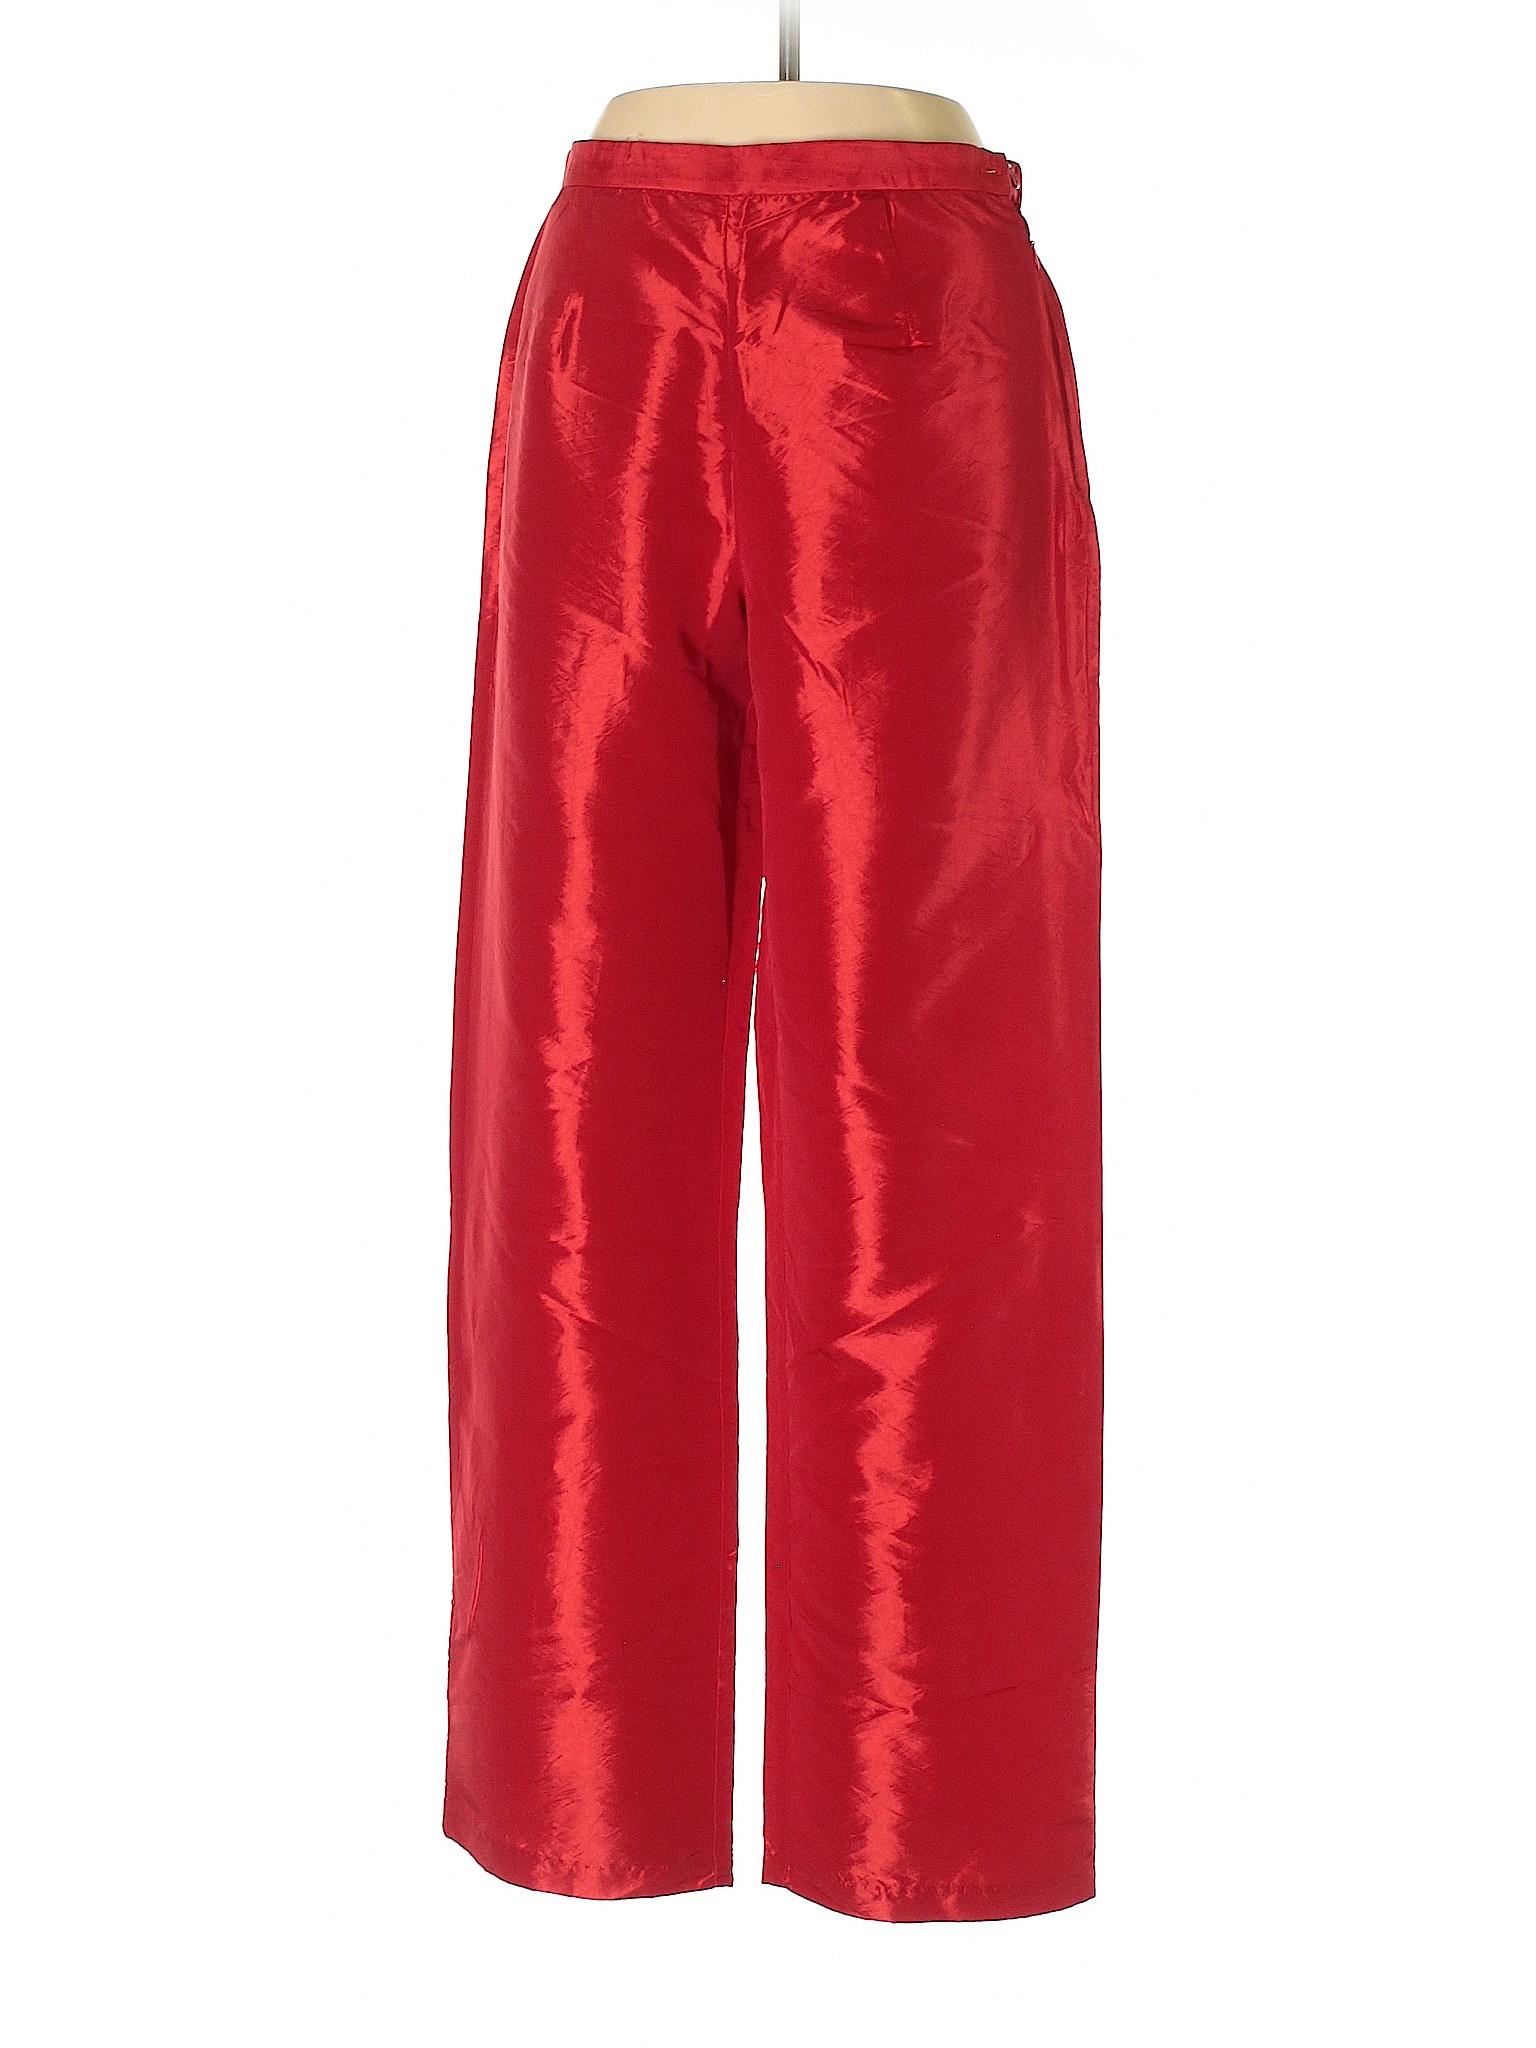 red dress pants womens